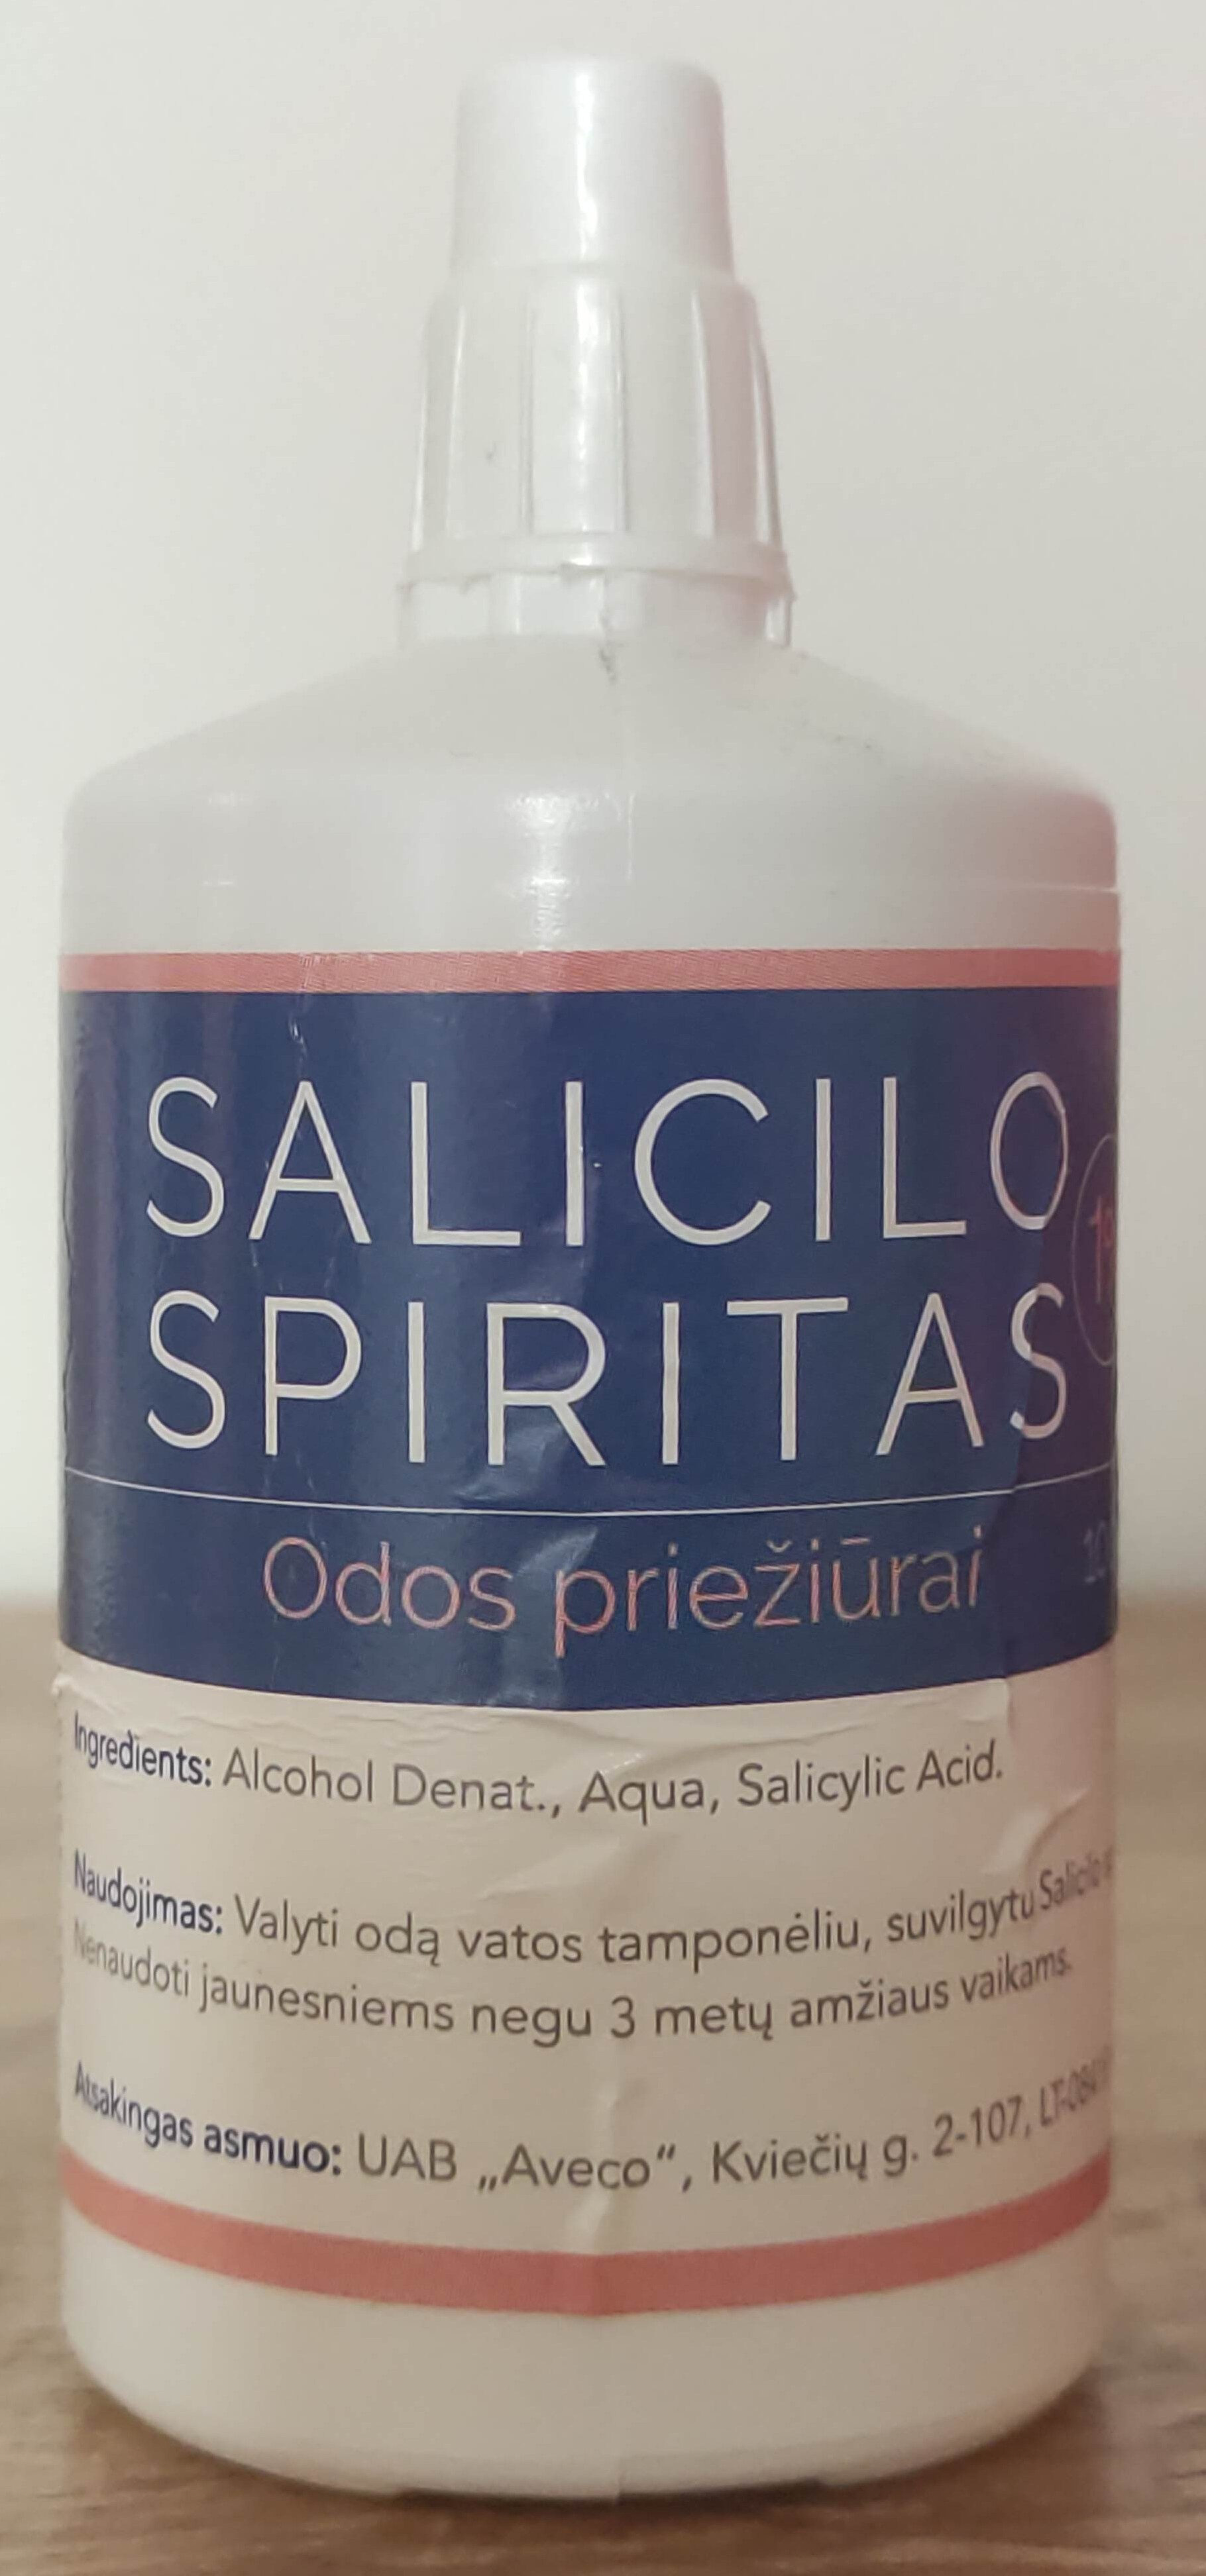 Salicilo spiritas - Tuote - lt